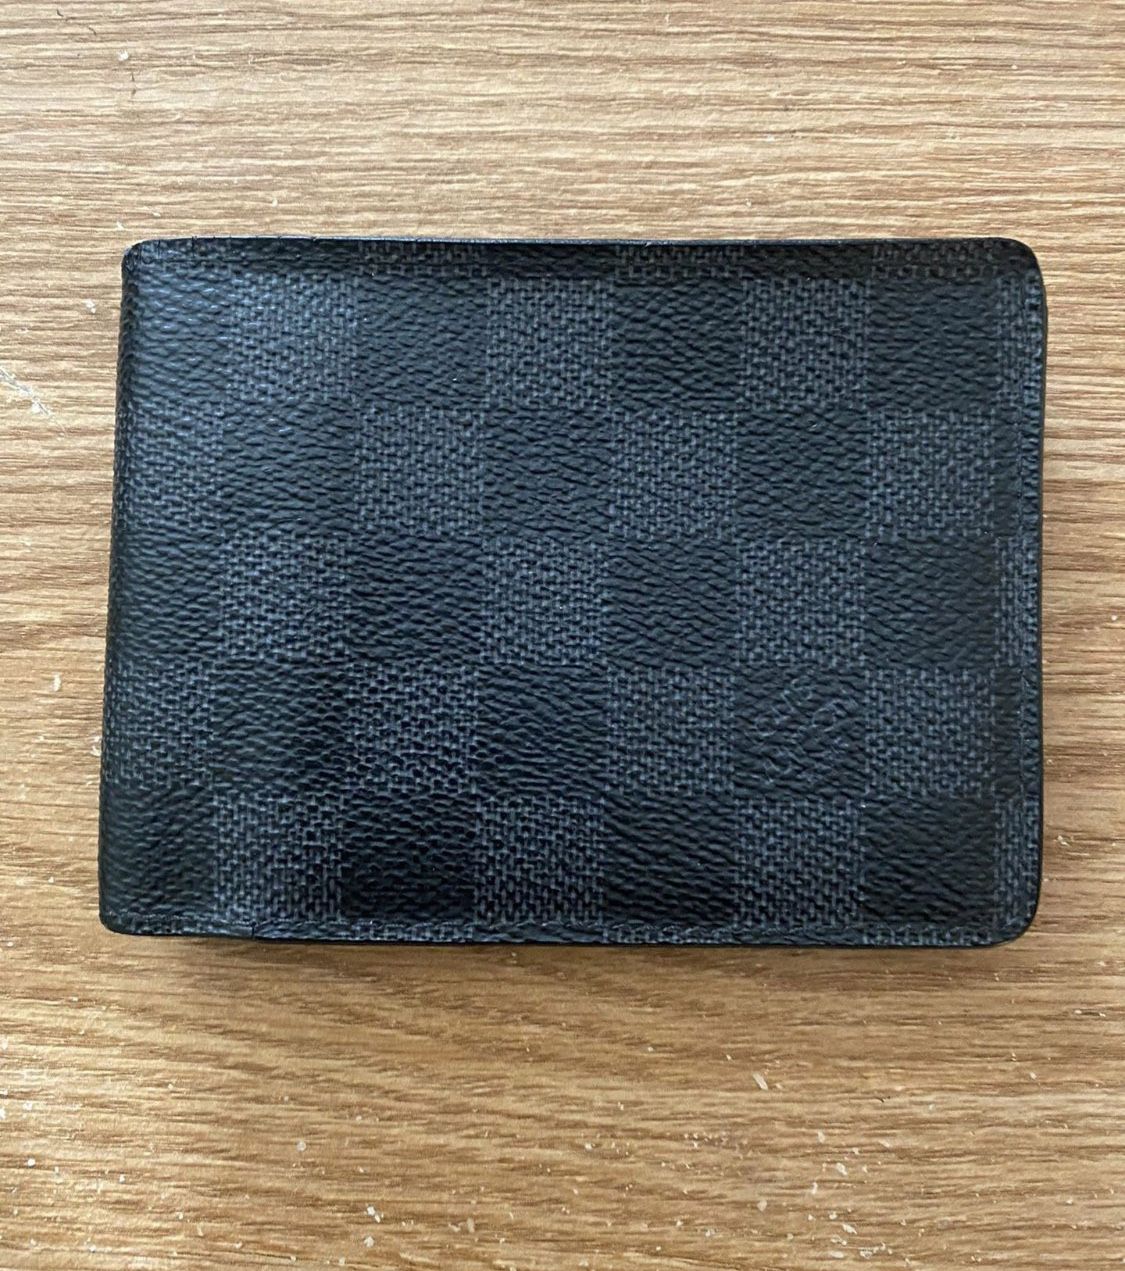 Buy Louis Vuitton Checkered Men's Wallet Black online